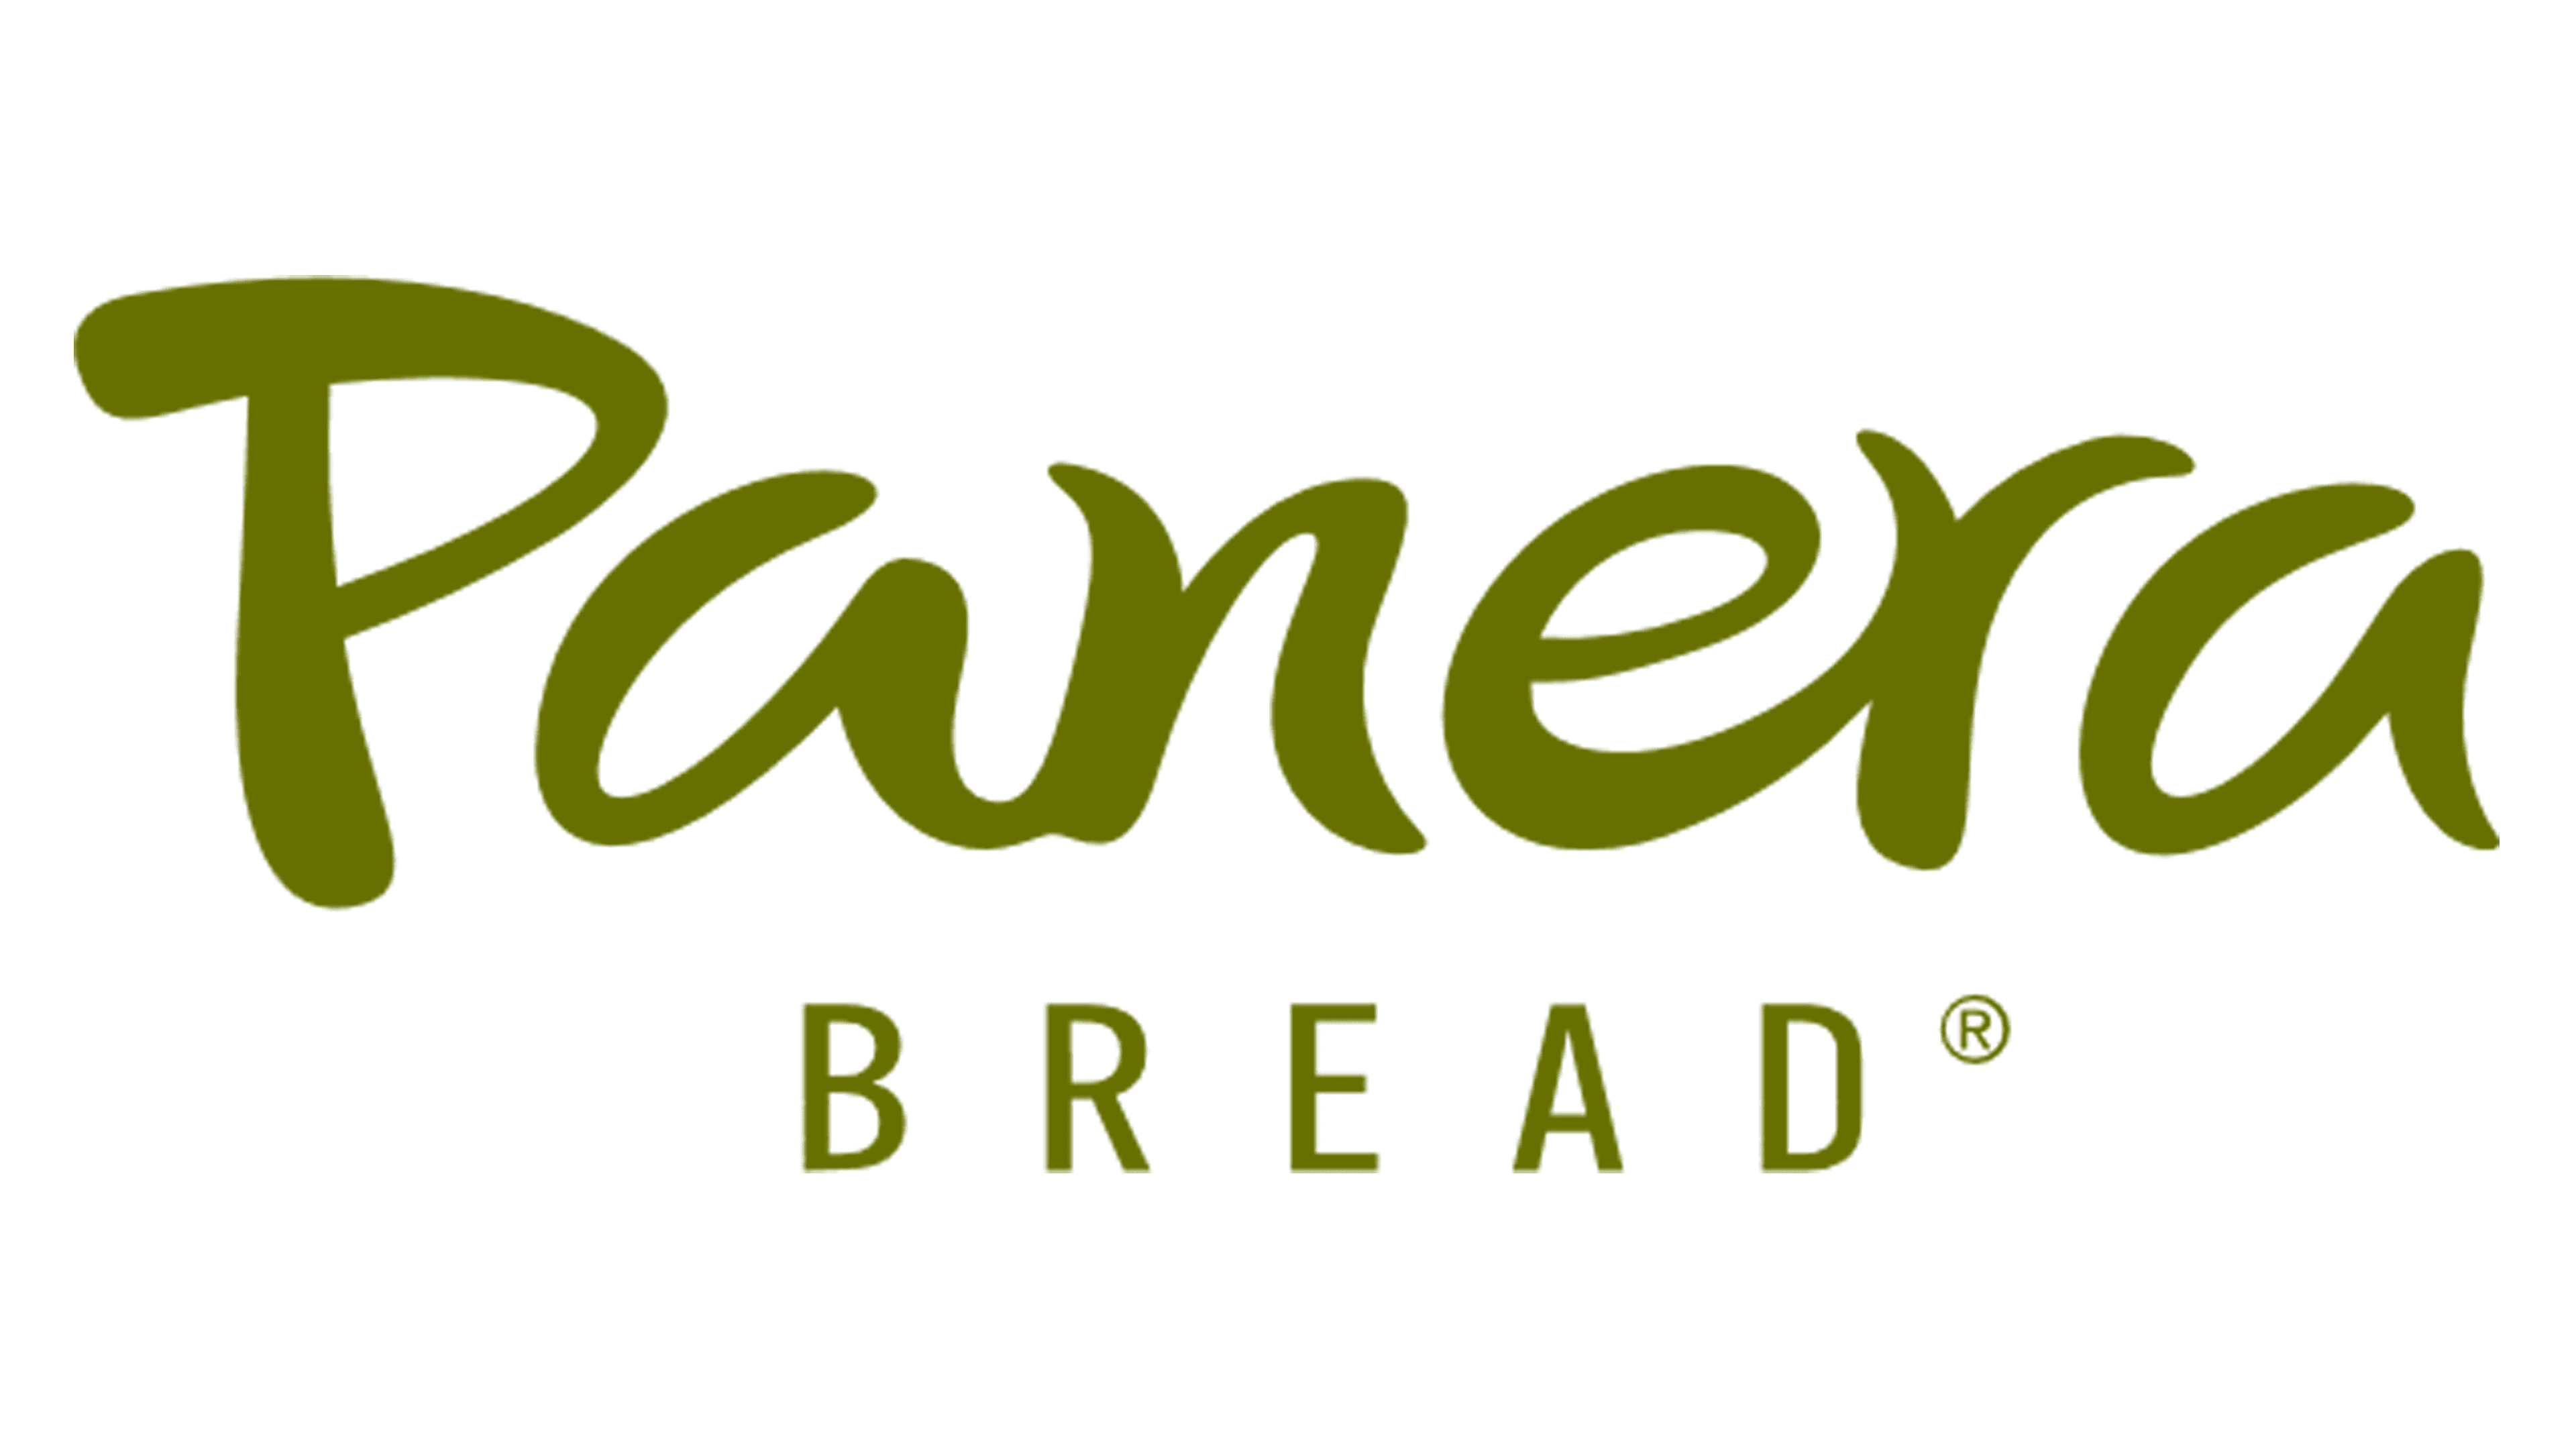 Panera-Bread-logo